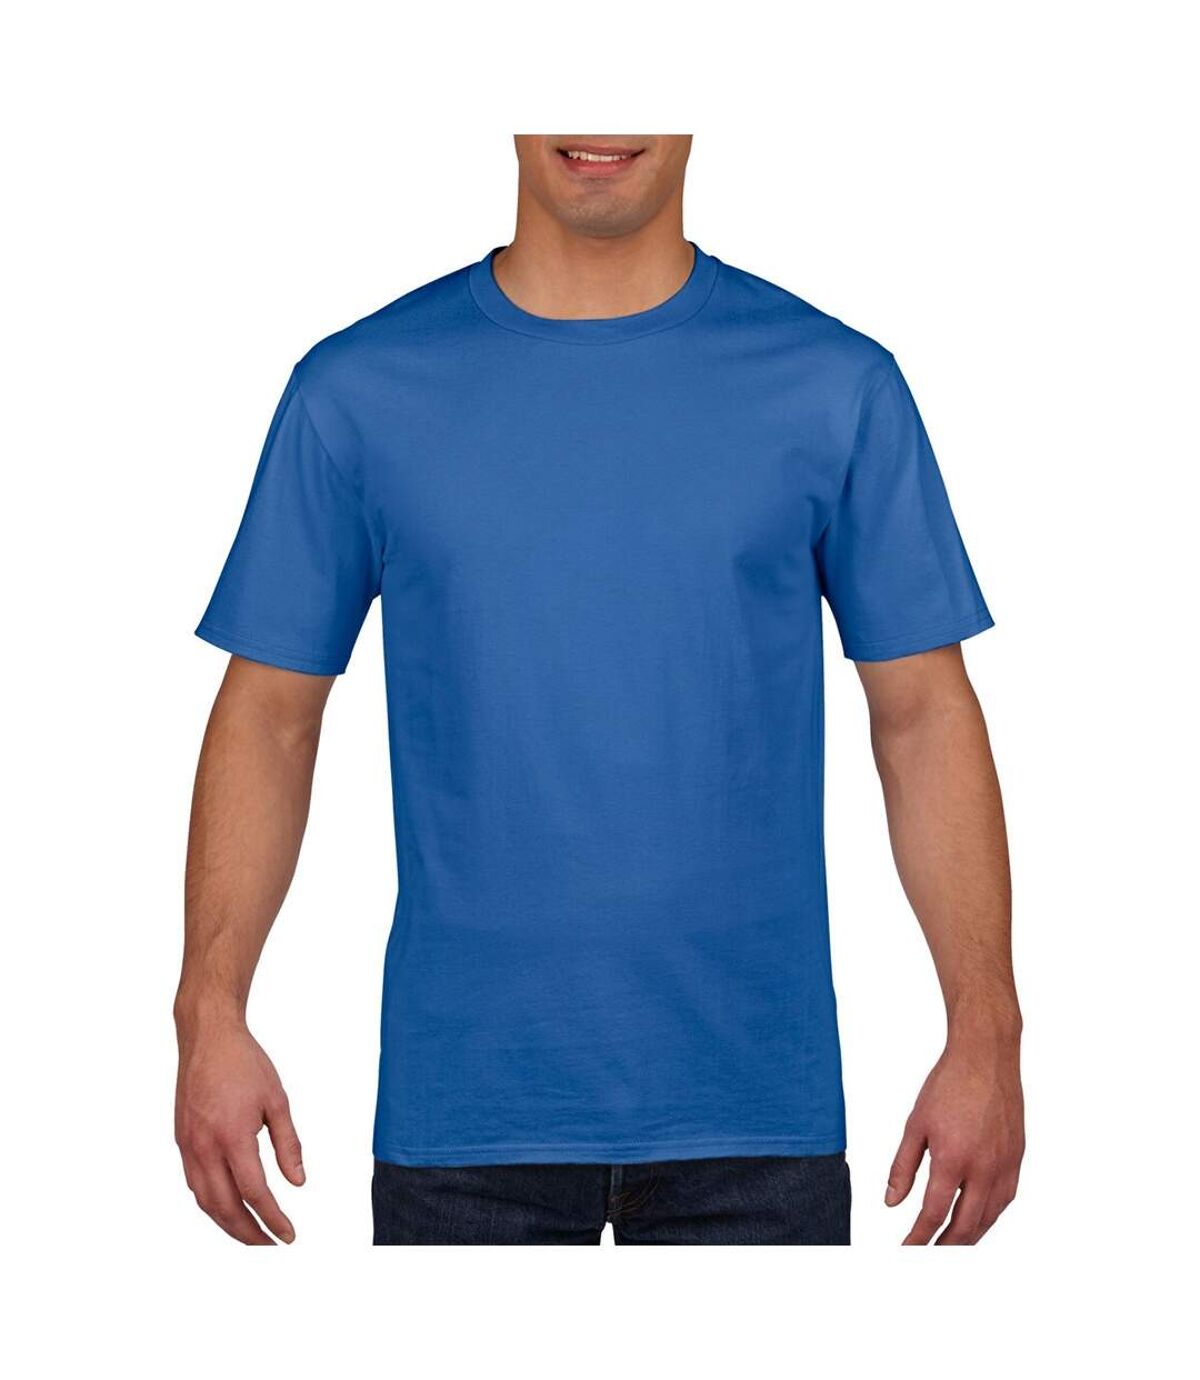 Gildan Mens Premium Cotton Ring Spun Short Sleeve T-Shirt (Royal)